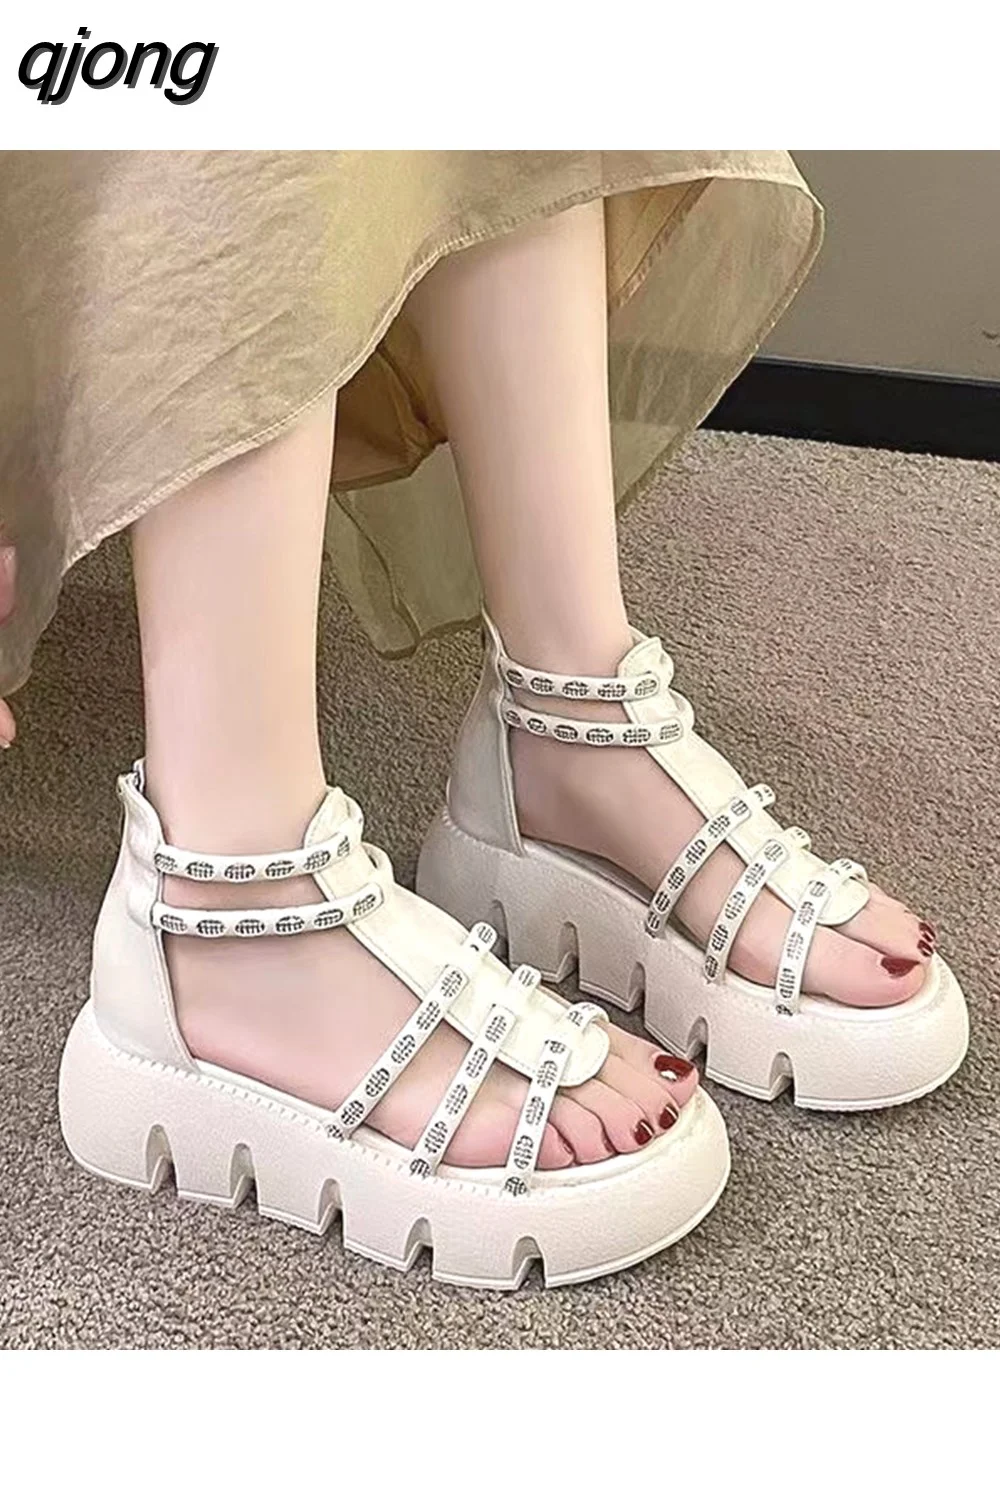 qjong Fashion Rivet Sandals Women Summer New Low-heel Roman-style Flat Womens Shoes Heels Women Open Toe Platform Sandals